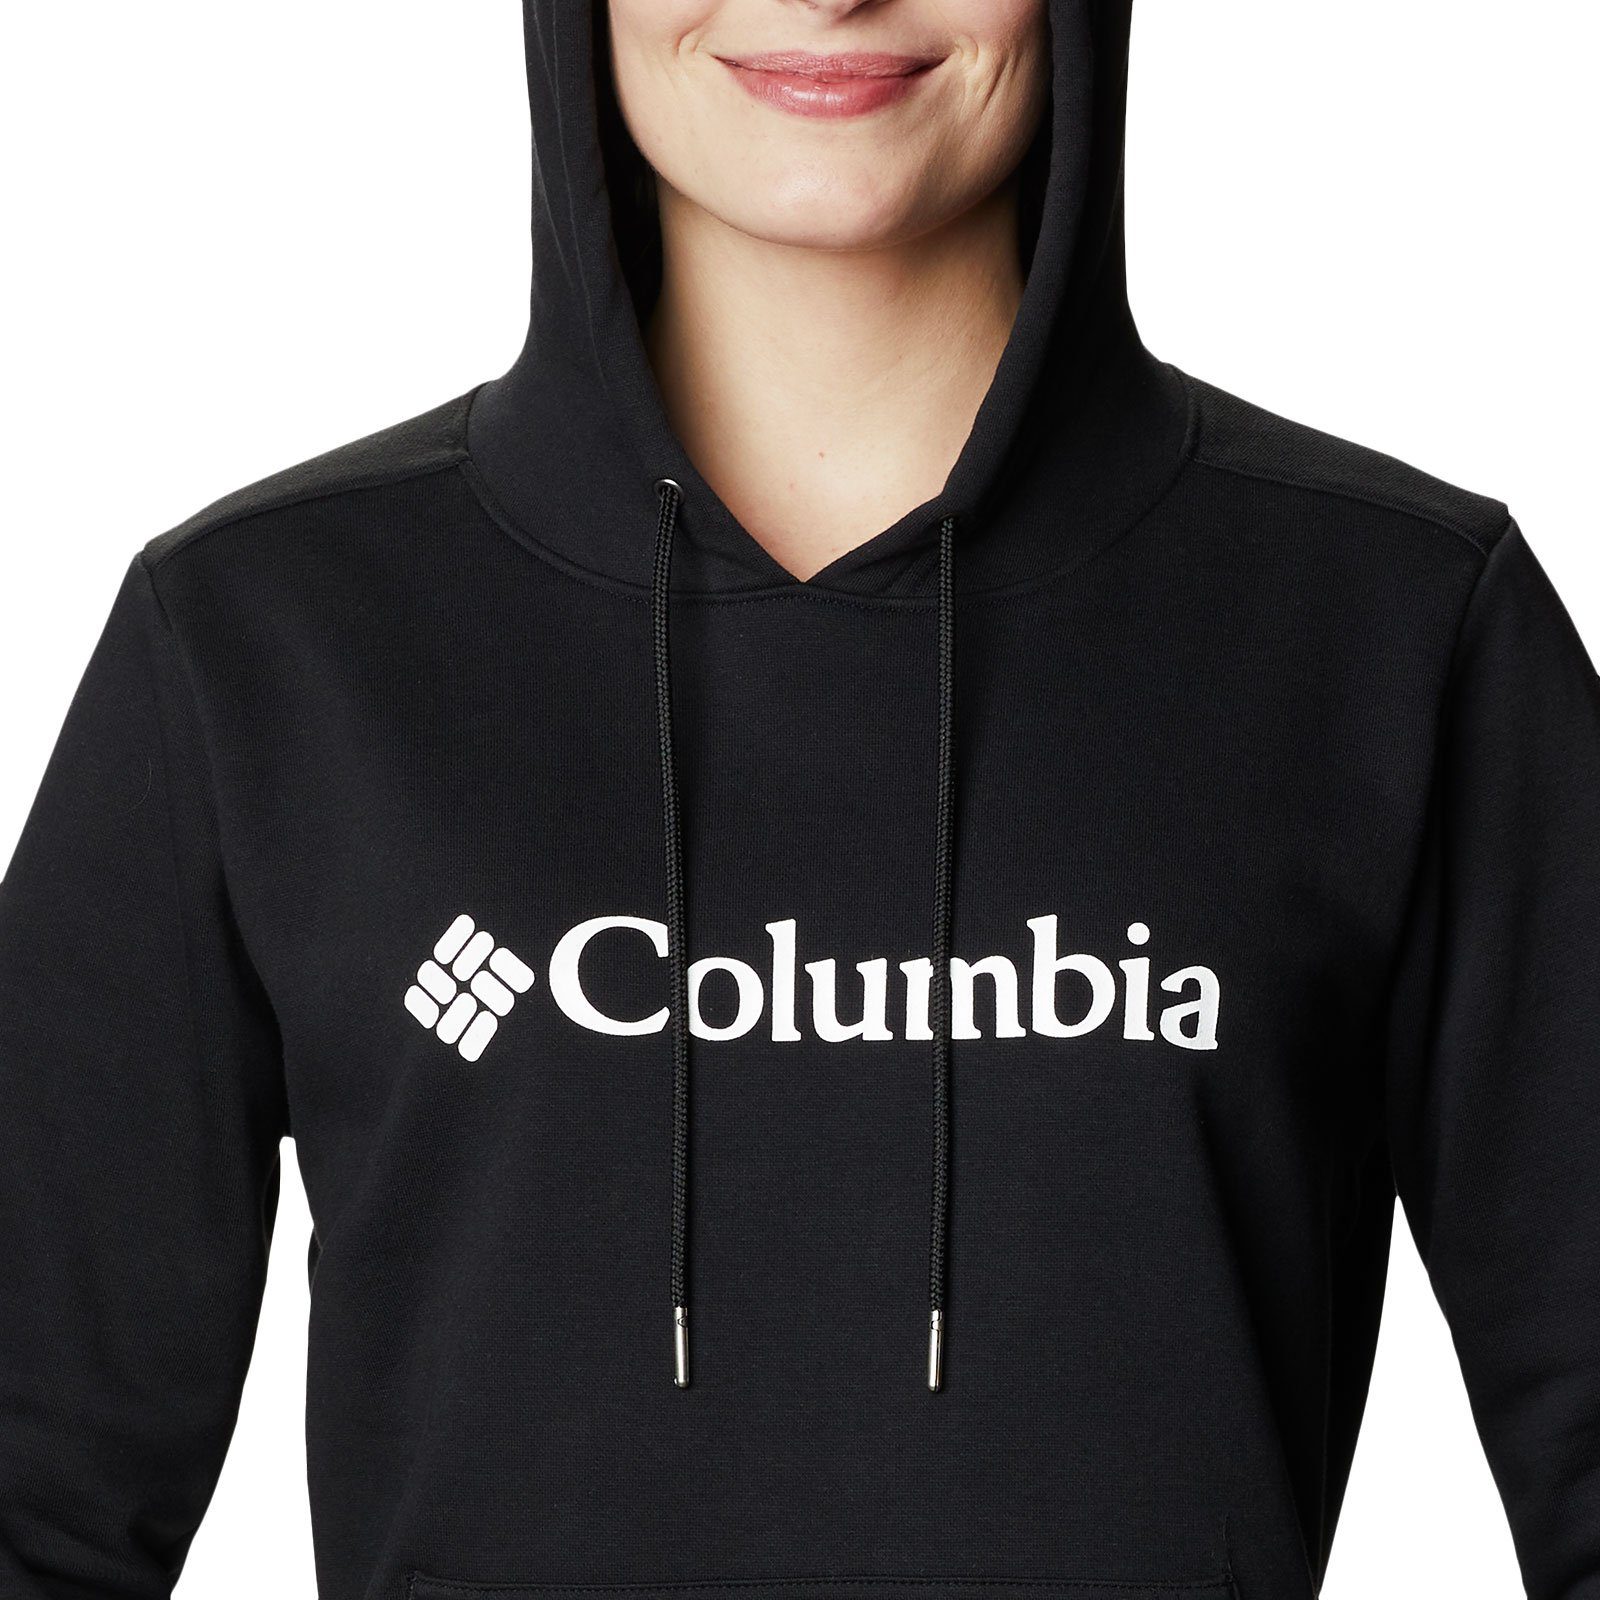 Hoodie Logo Kapuzenpullover Columbia Kängurutasche Columbia™ black 012 mit großer